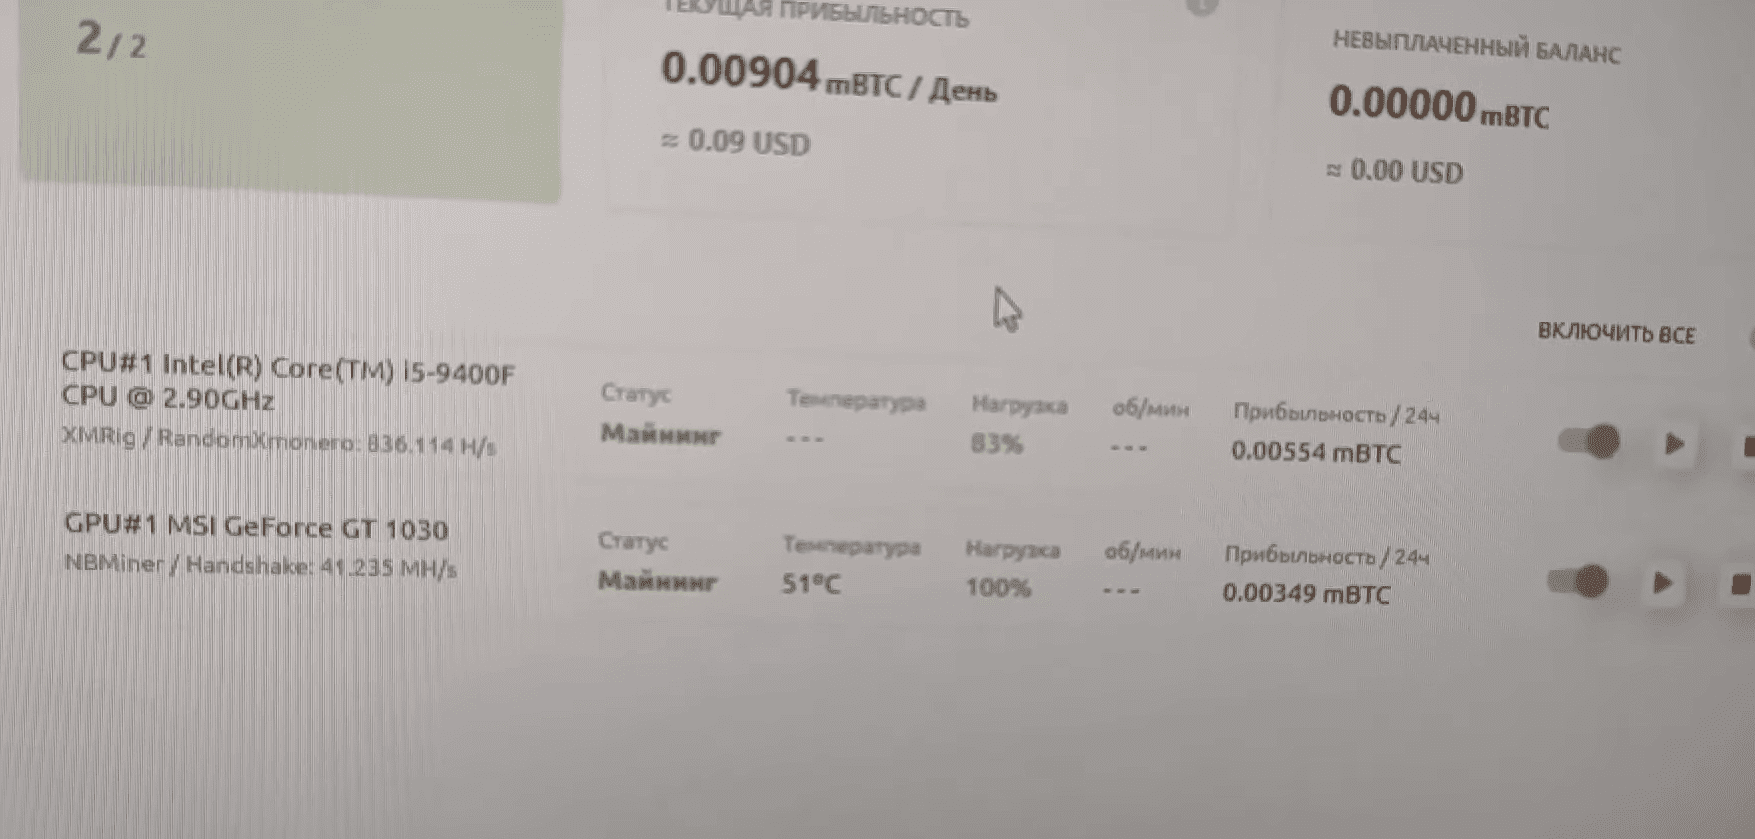 Nvidia gt 1030 майнинг обмен валют в новосибирске левобережный